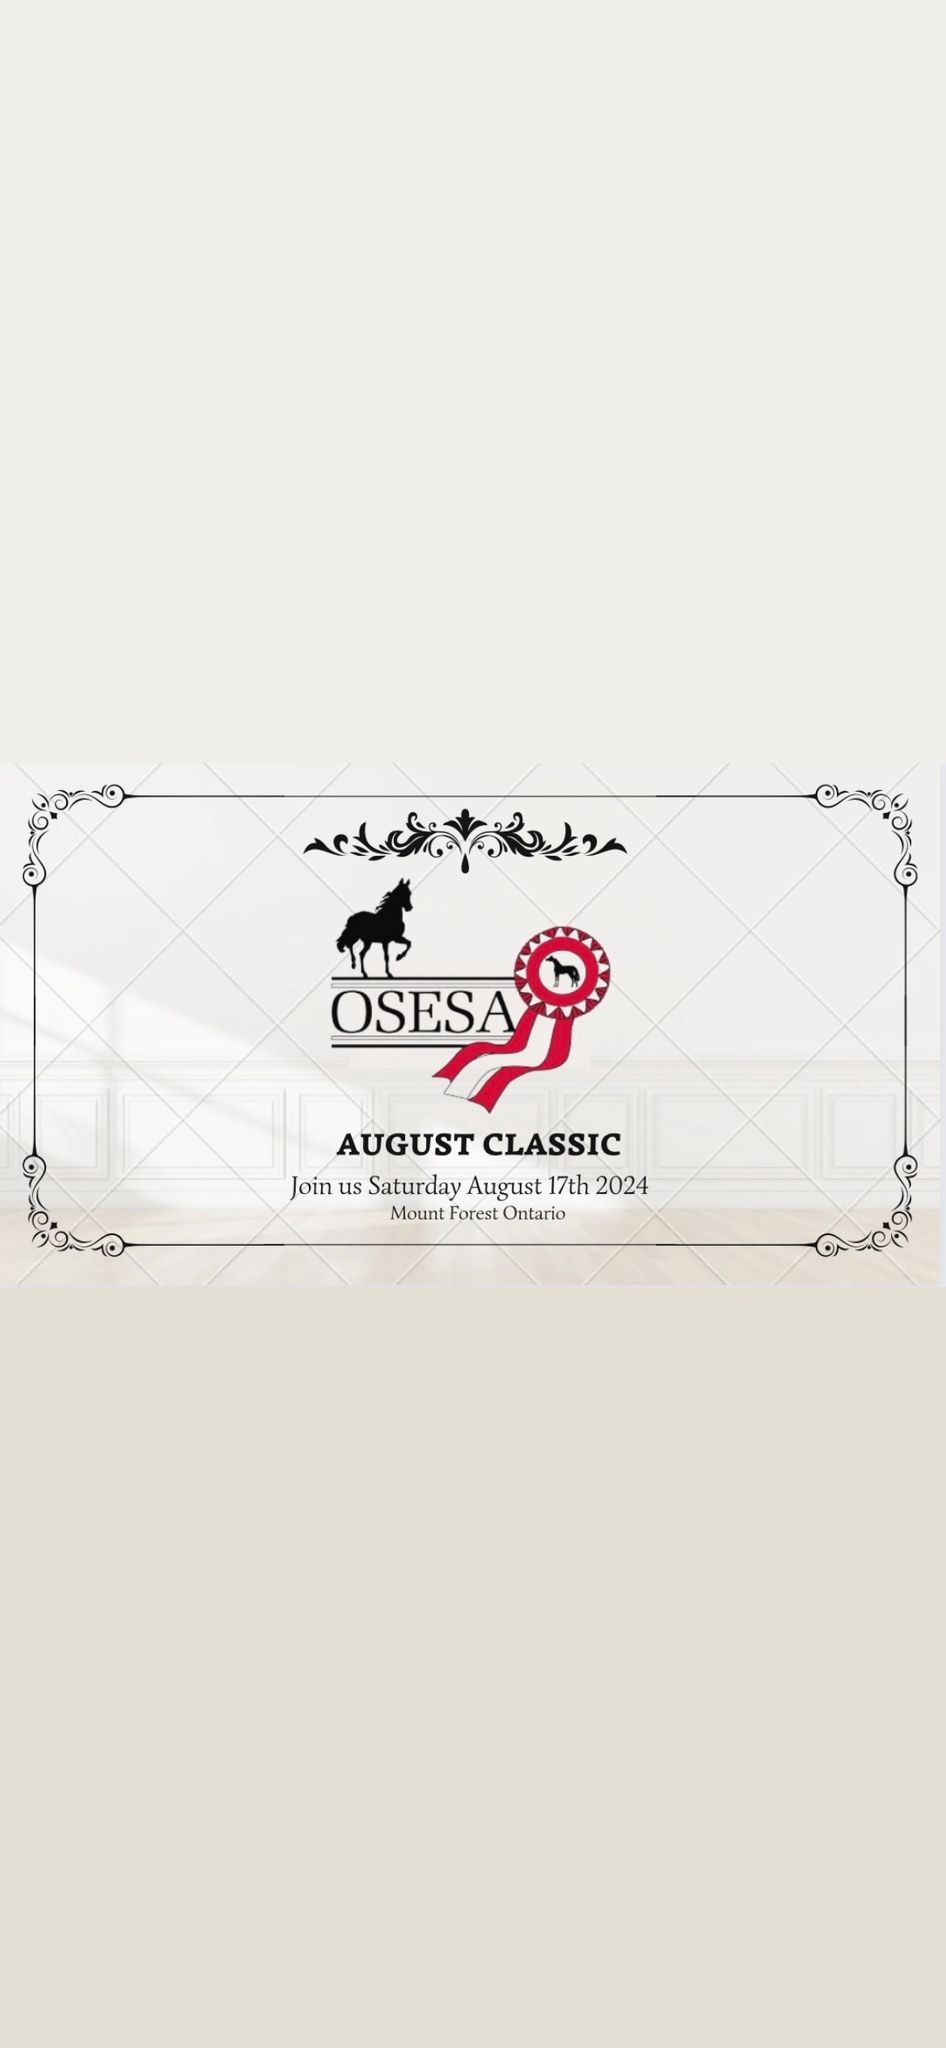 OSESA Summer Classic ASPC\/AMHR\/OPEN